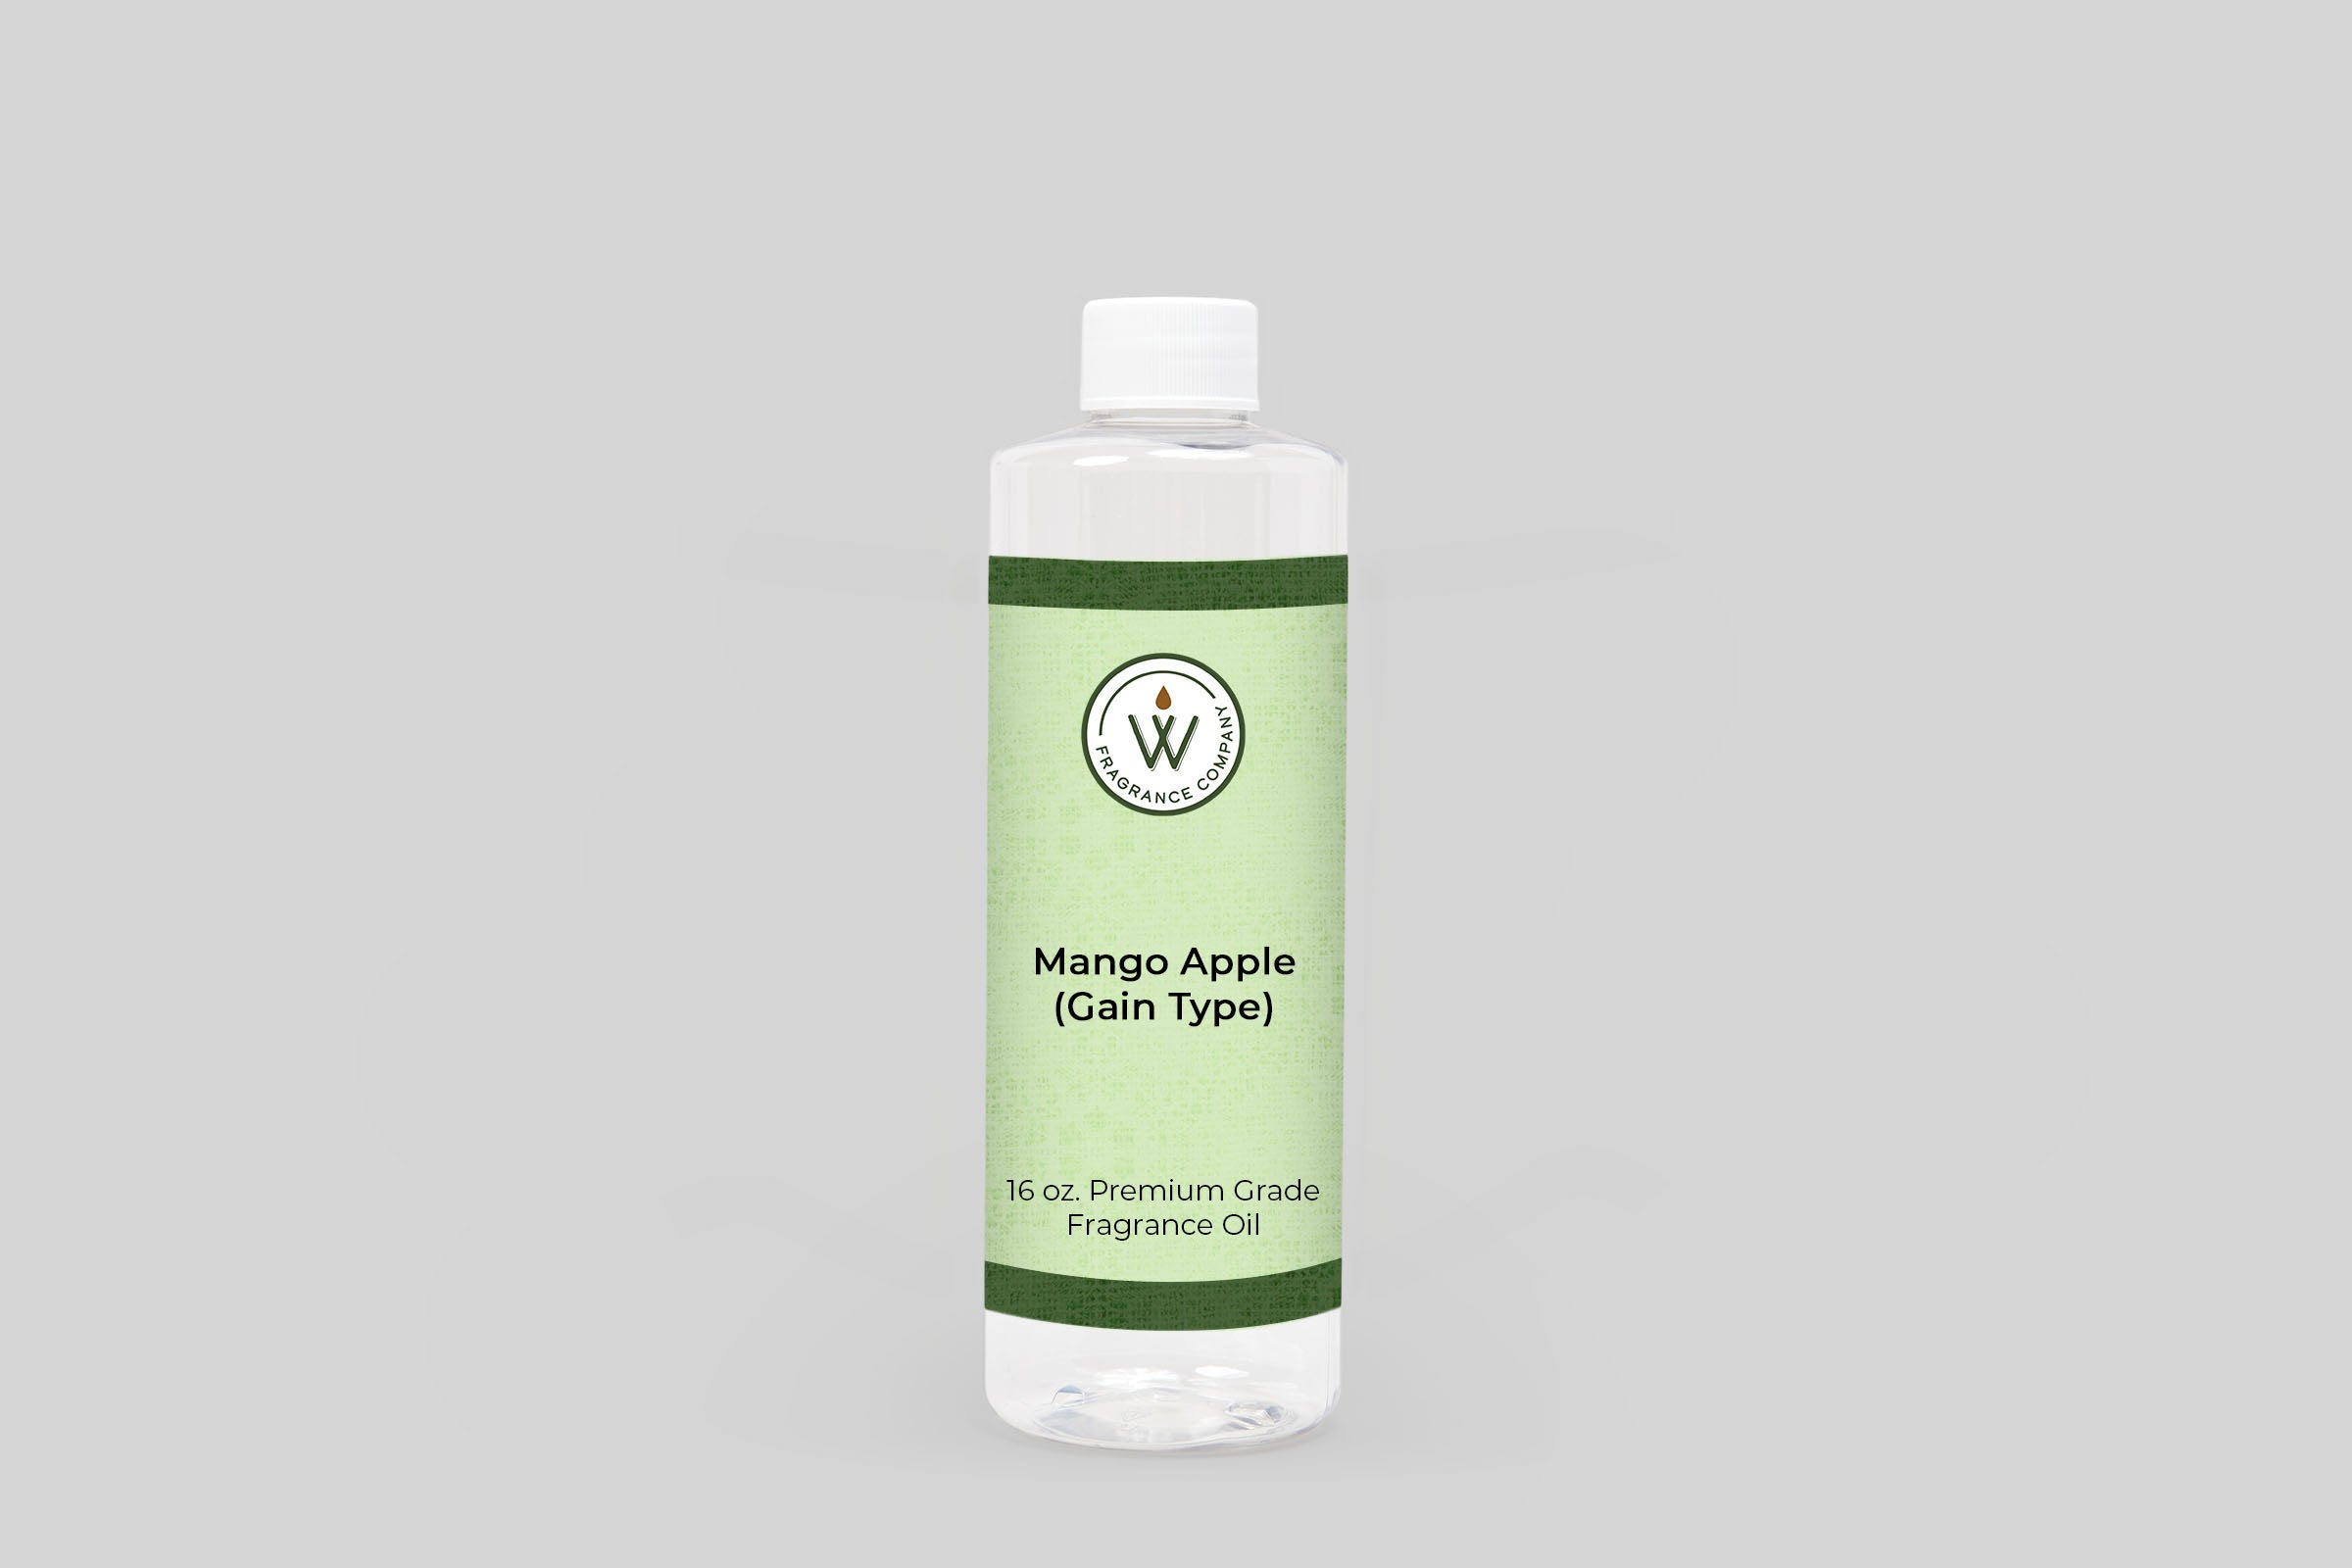 Mango Apple (Gain Type) Fragrance Oil